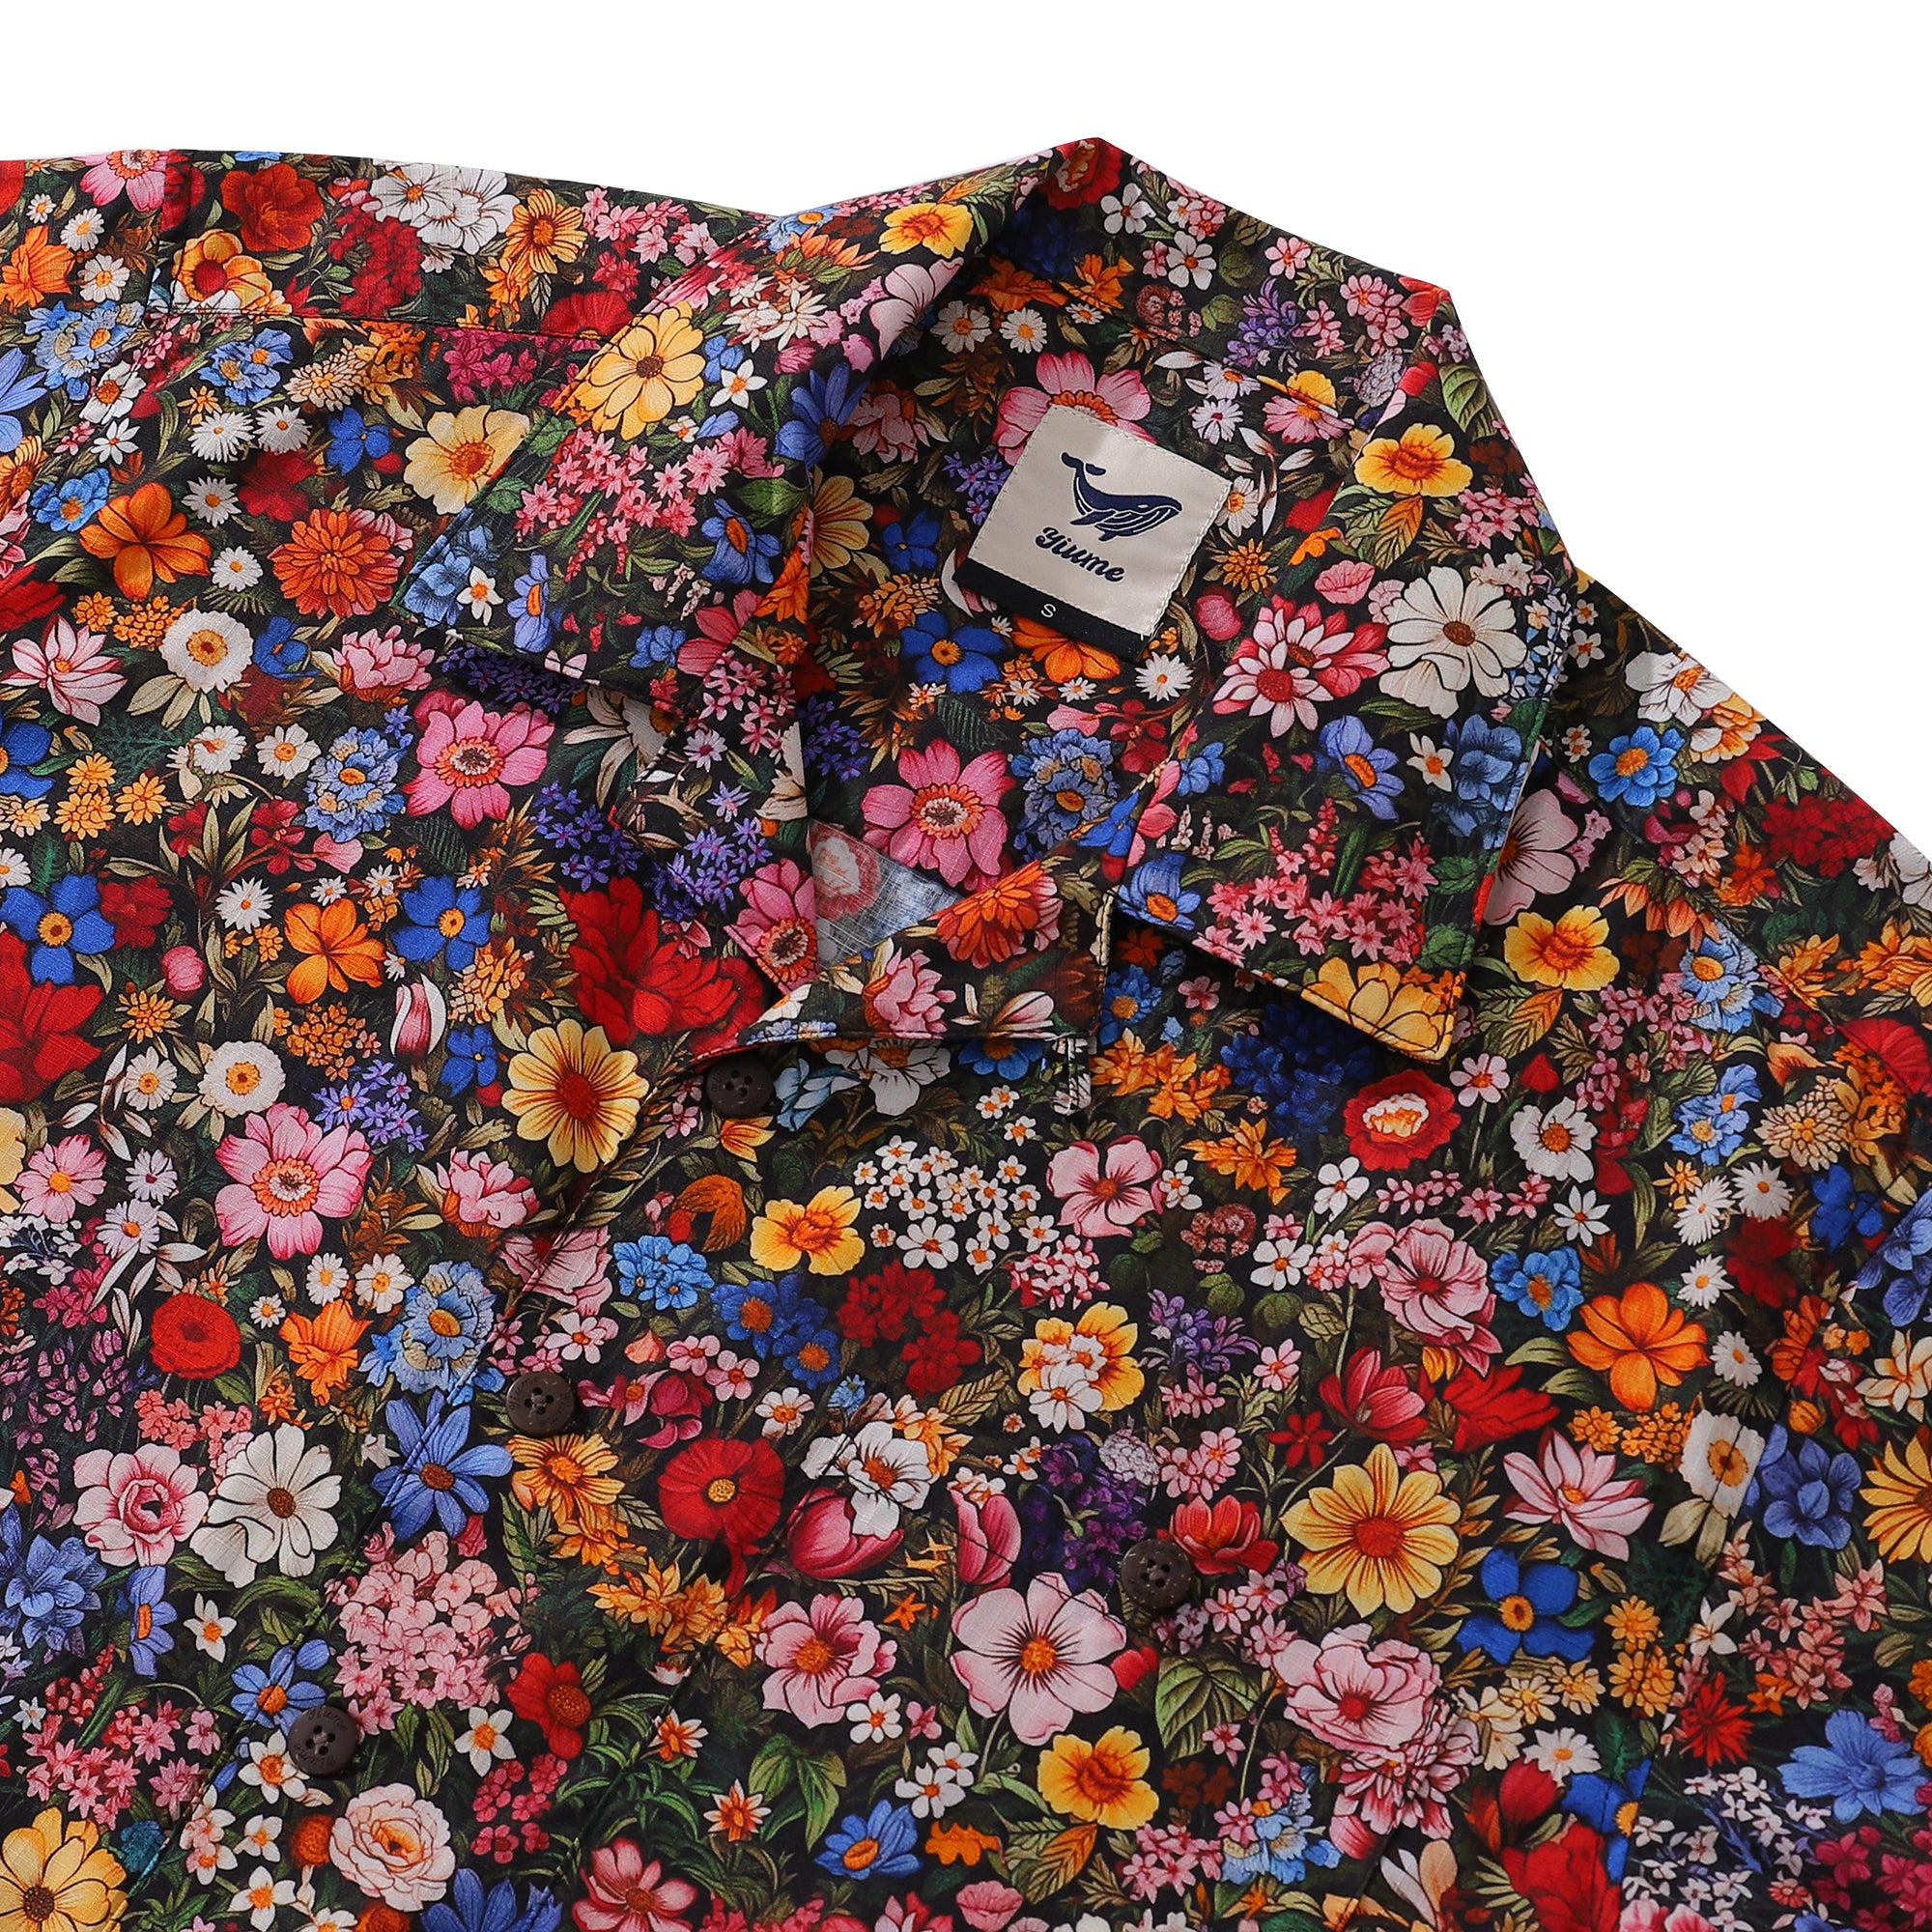 Hawaiian Shirt For Men Among the Flowers Print Shirt Camp Collar 100% Cotton